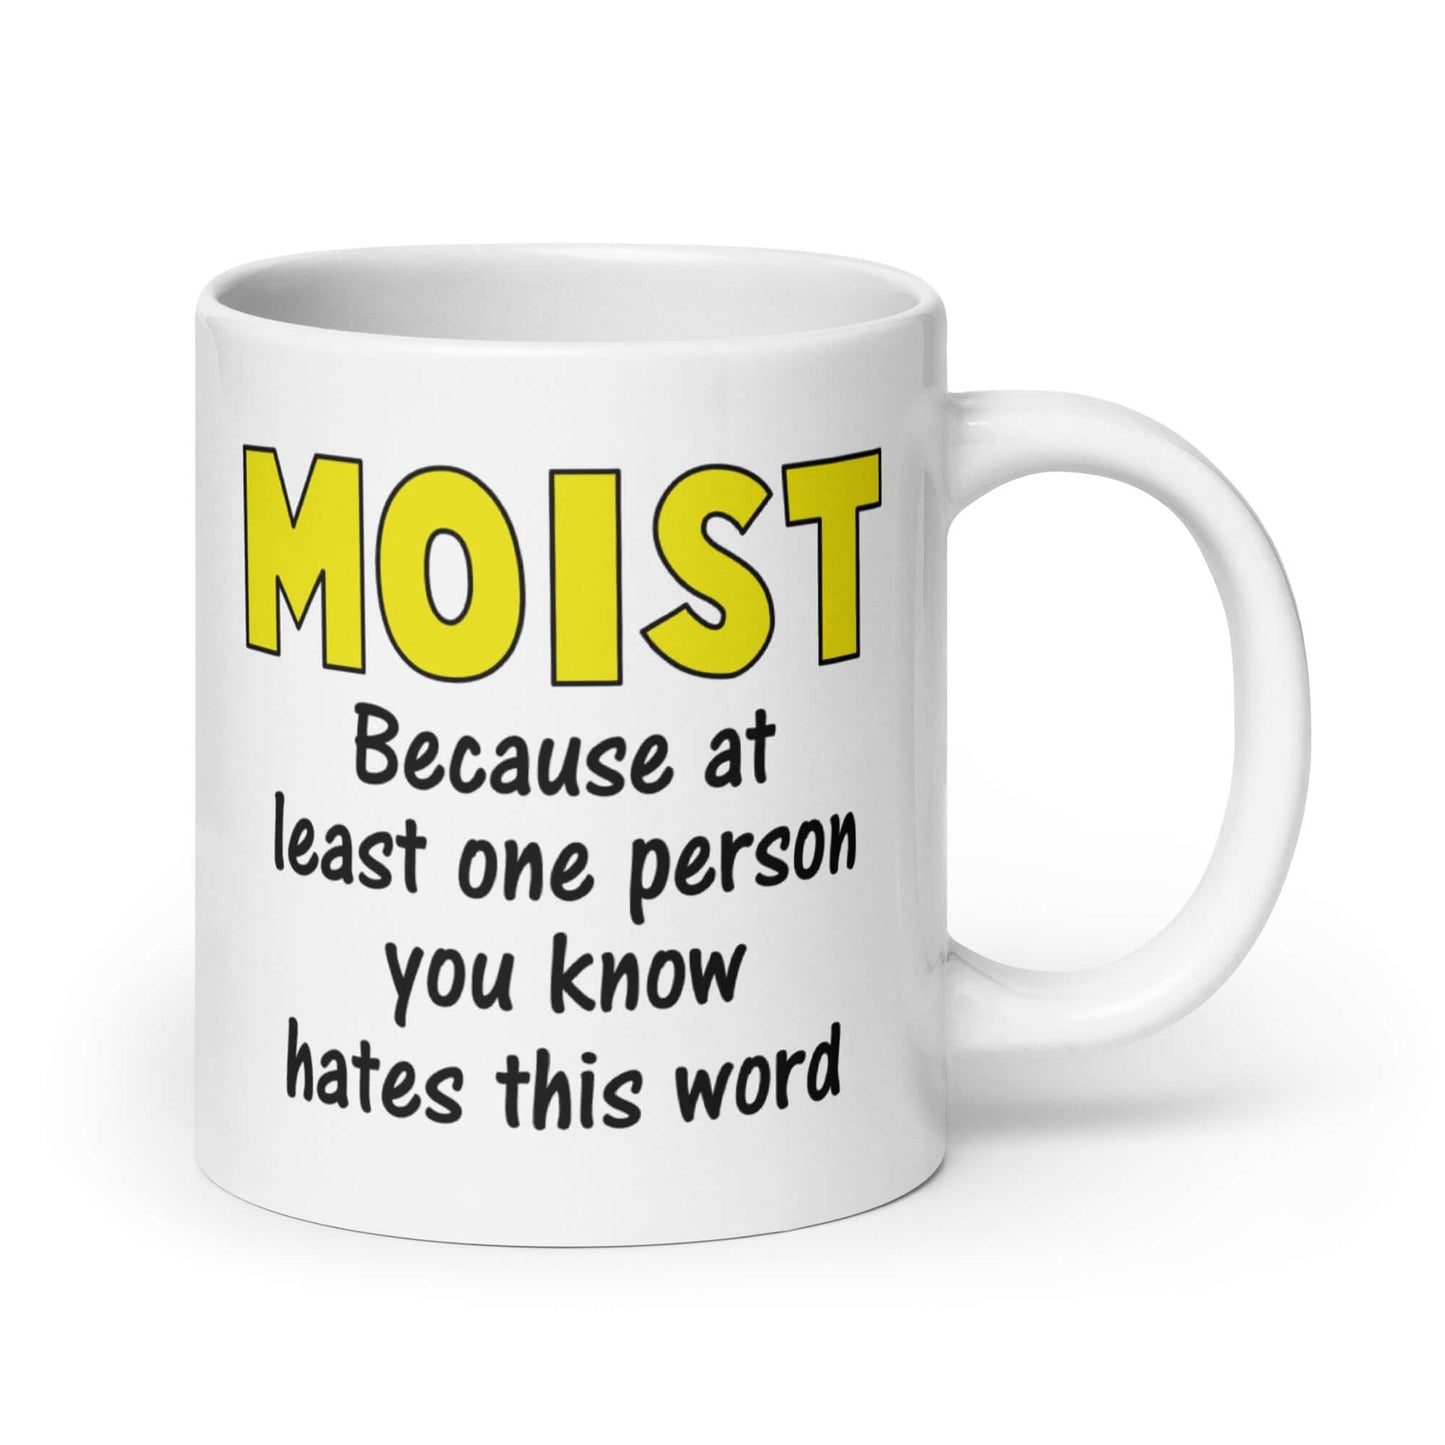 Funny moist coffee mug